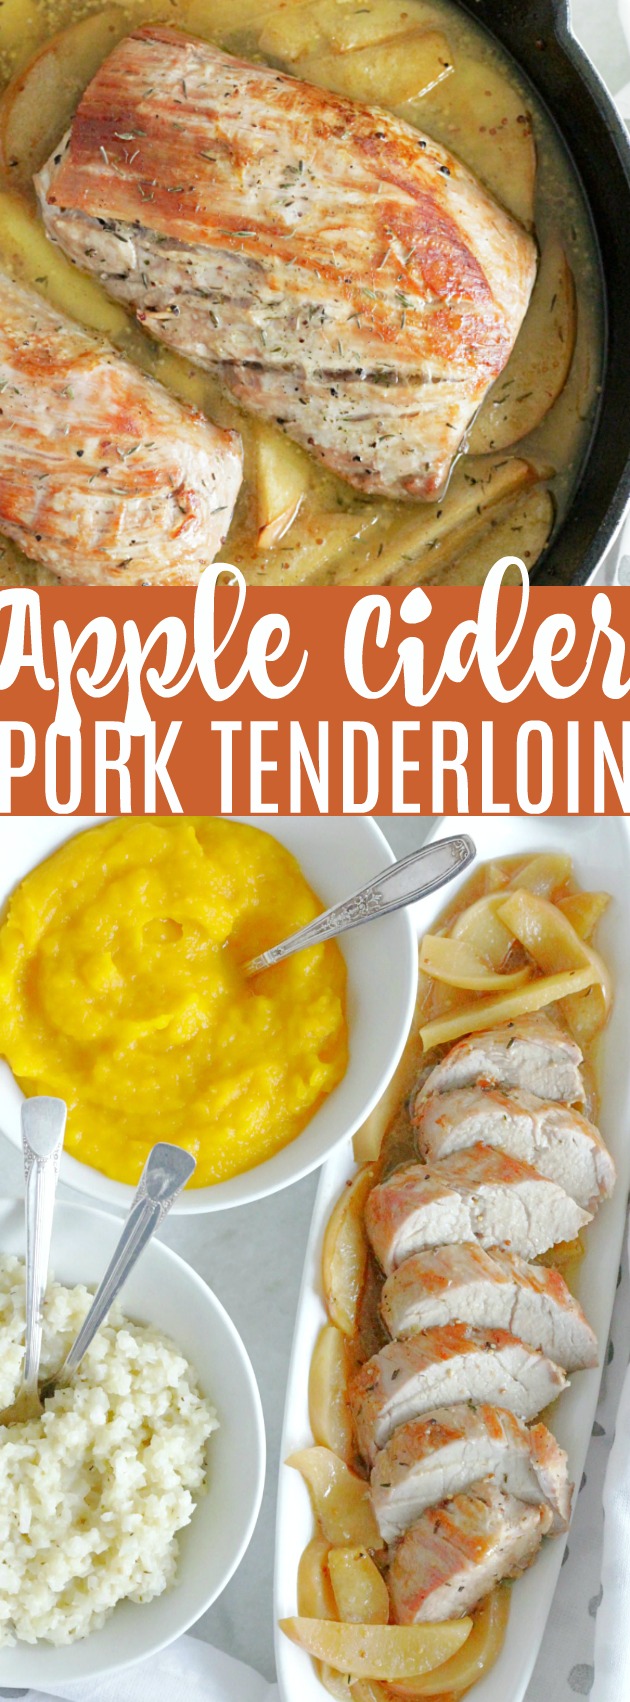 Apple Cider Pork Tenderloin with Premium Vegetables #ad #alexiaveggiesides